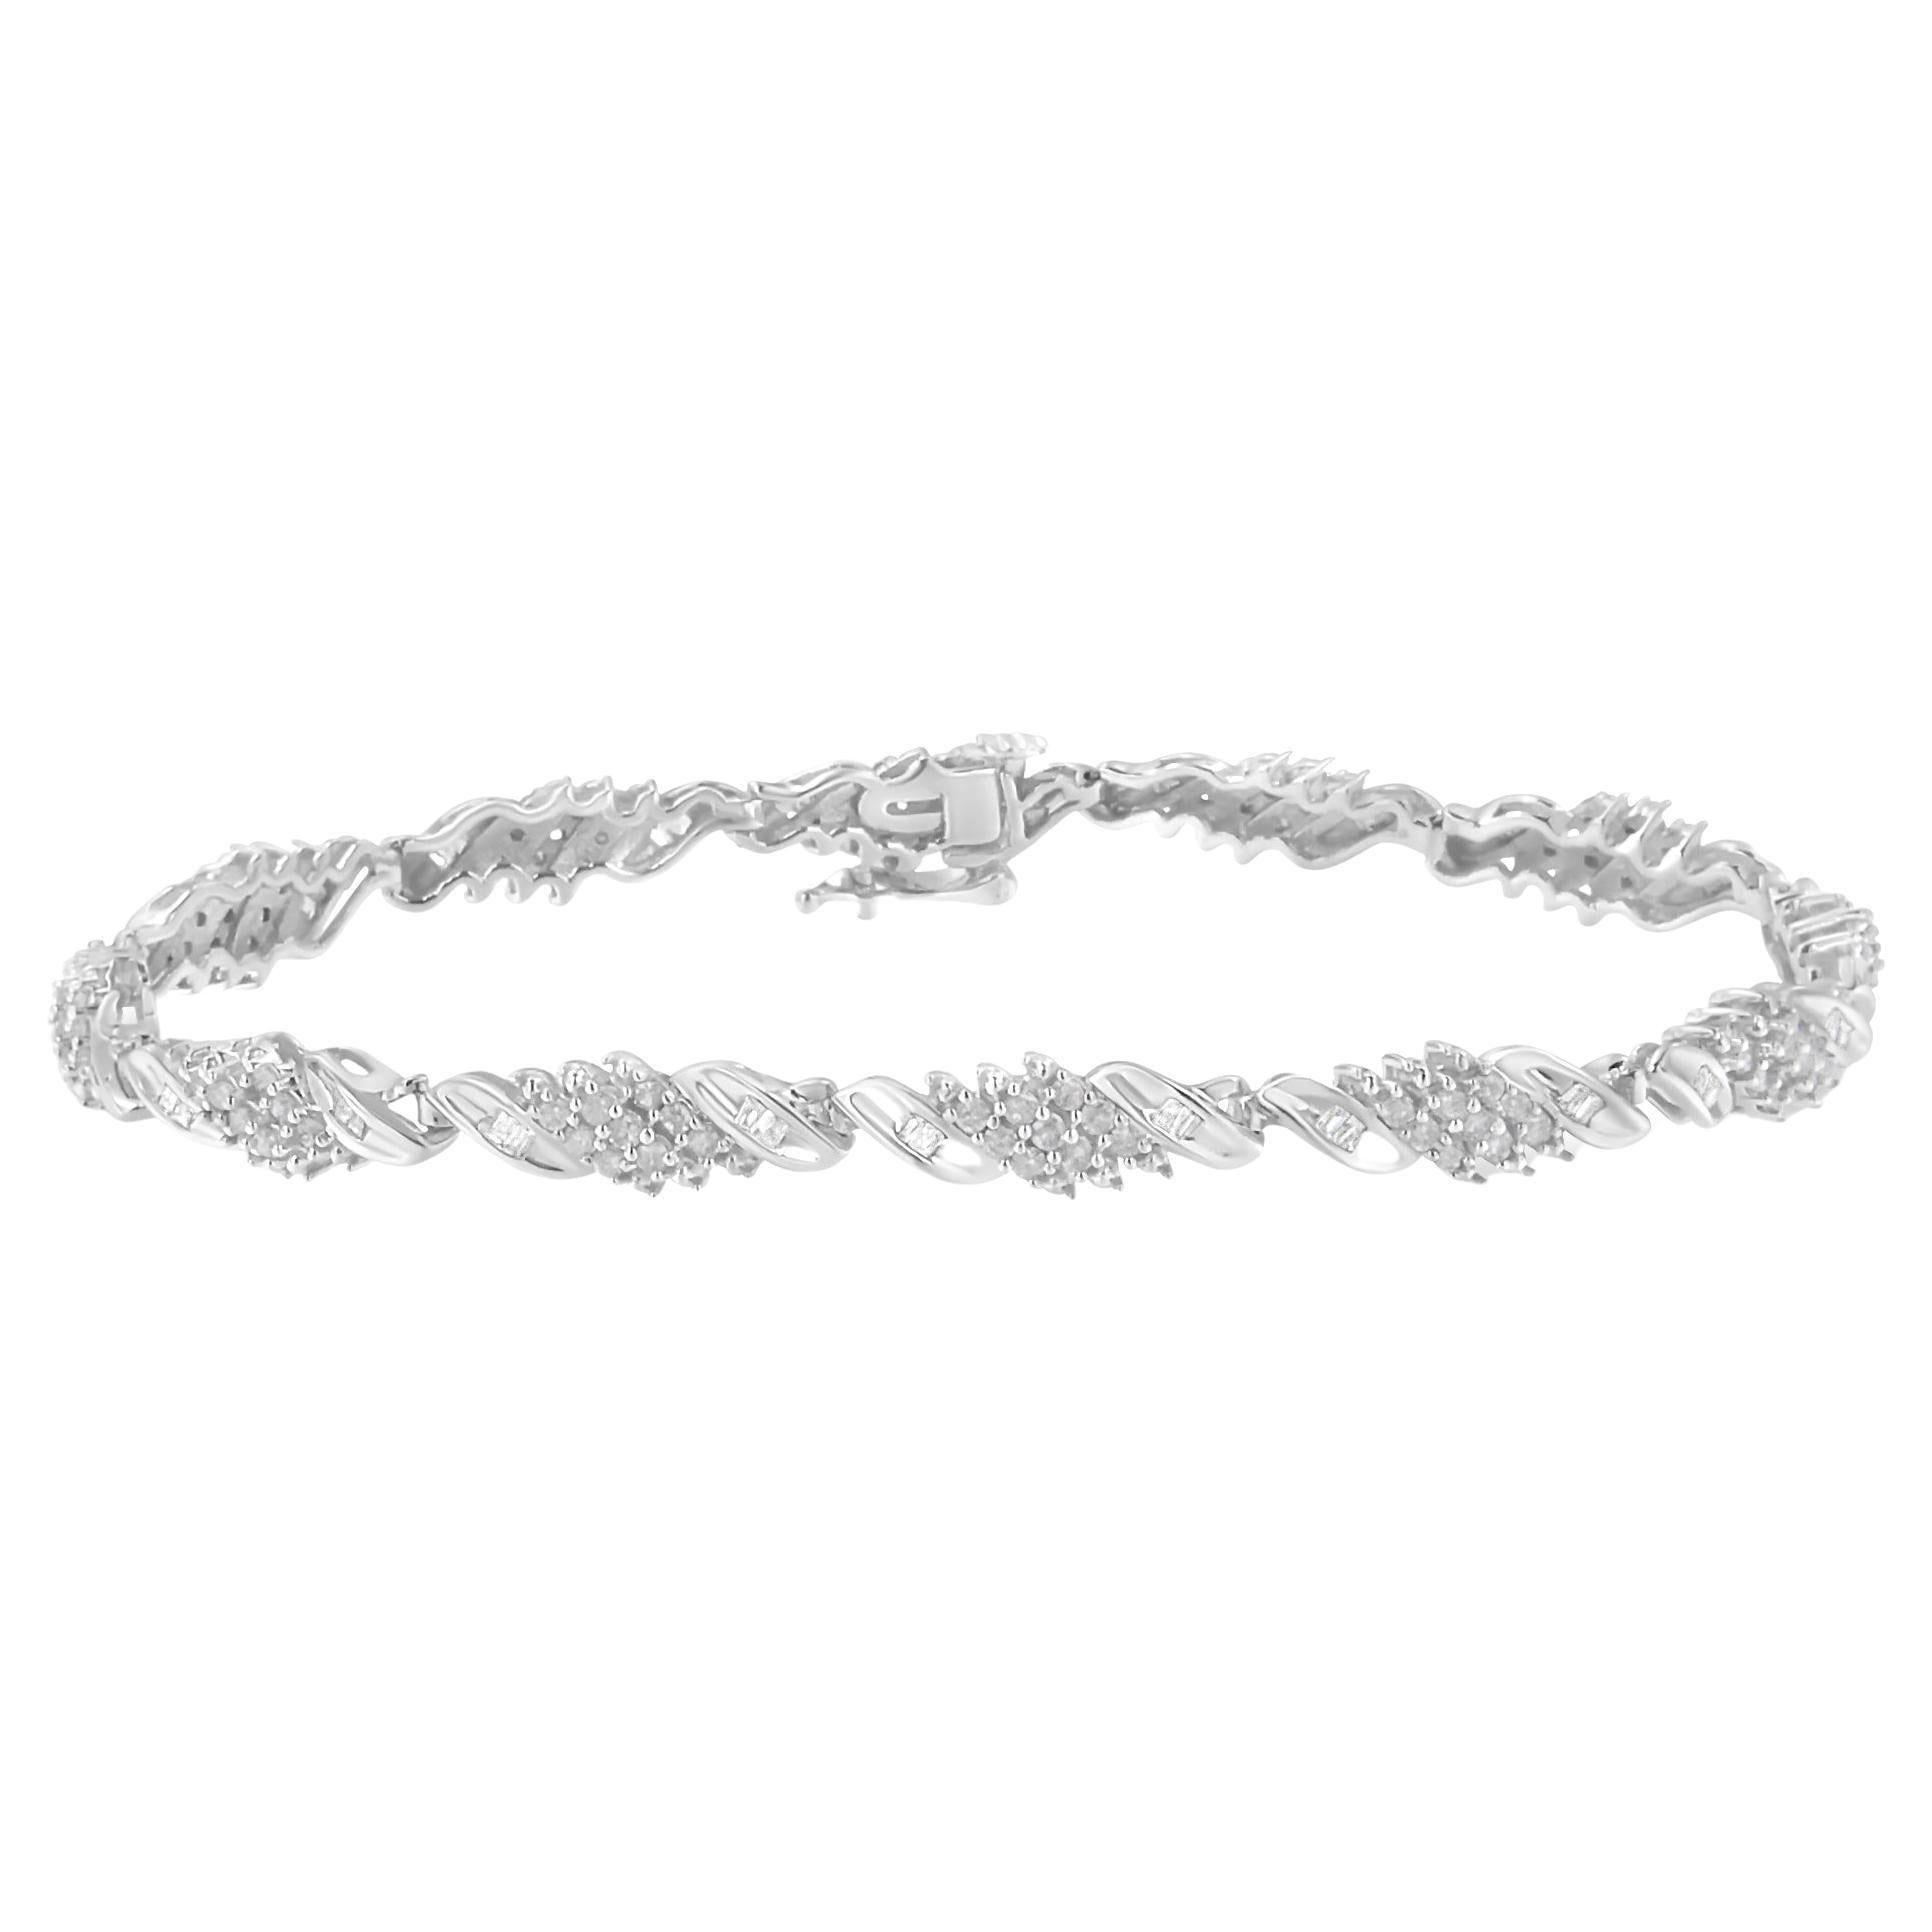 .925 Sterling Silver 1 1/2 Carat Pave and Channel-Set Diamond Link Bracelet